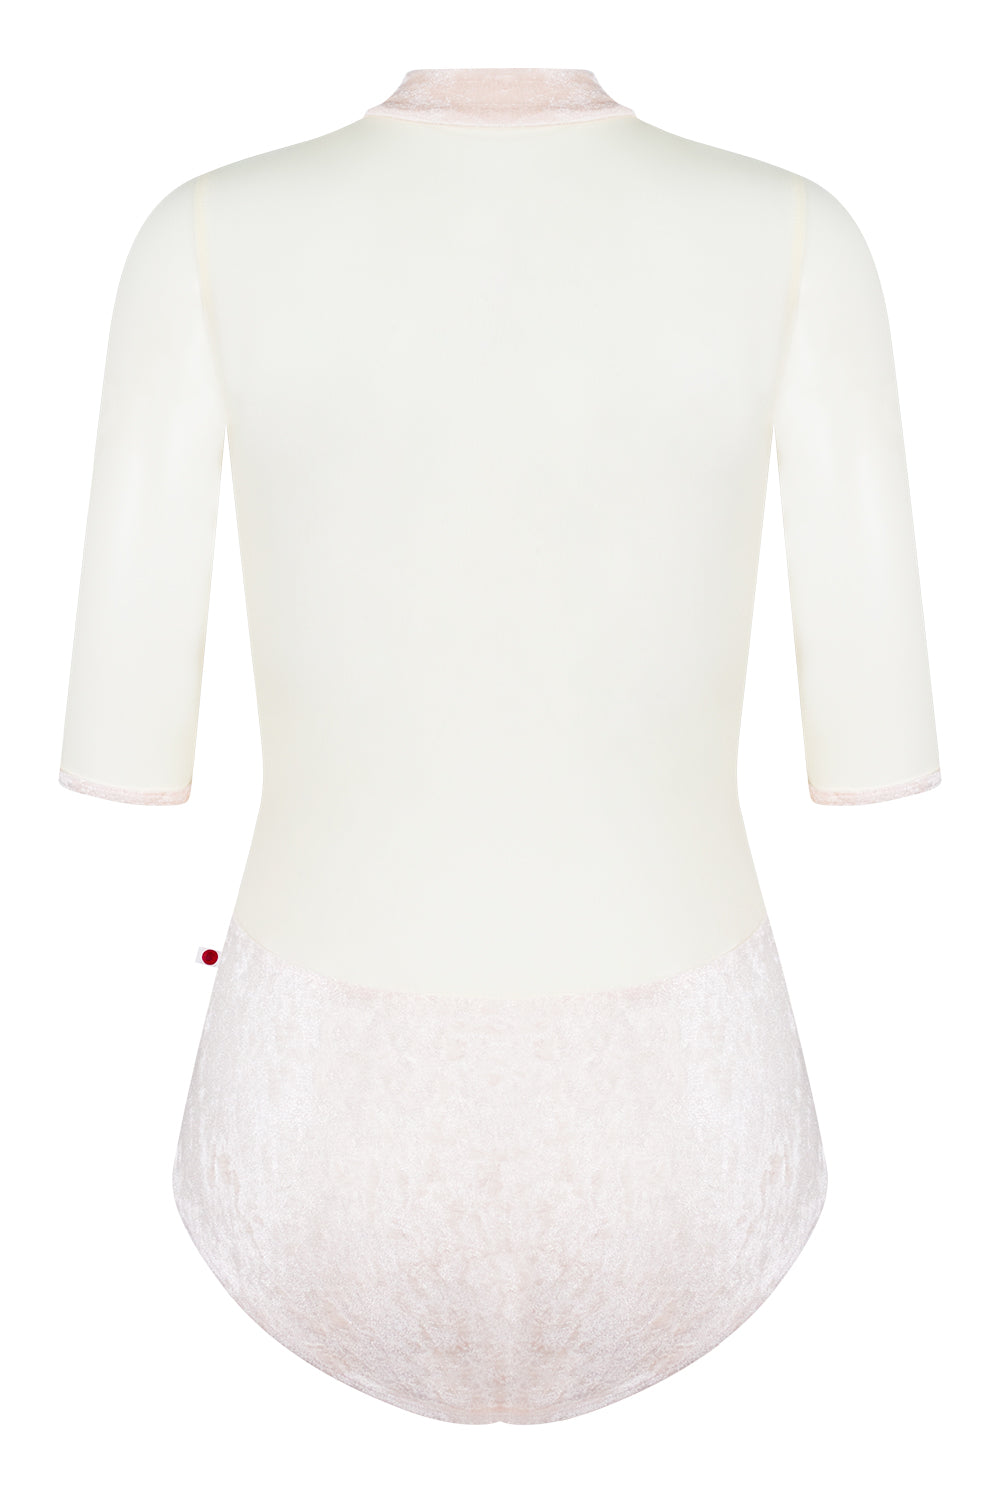 Jessica leotard in CV-Misty Rose body color with Mesh Vanilla top & Half sleeve color and CV-Misty Rose trim color